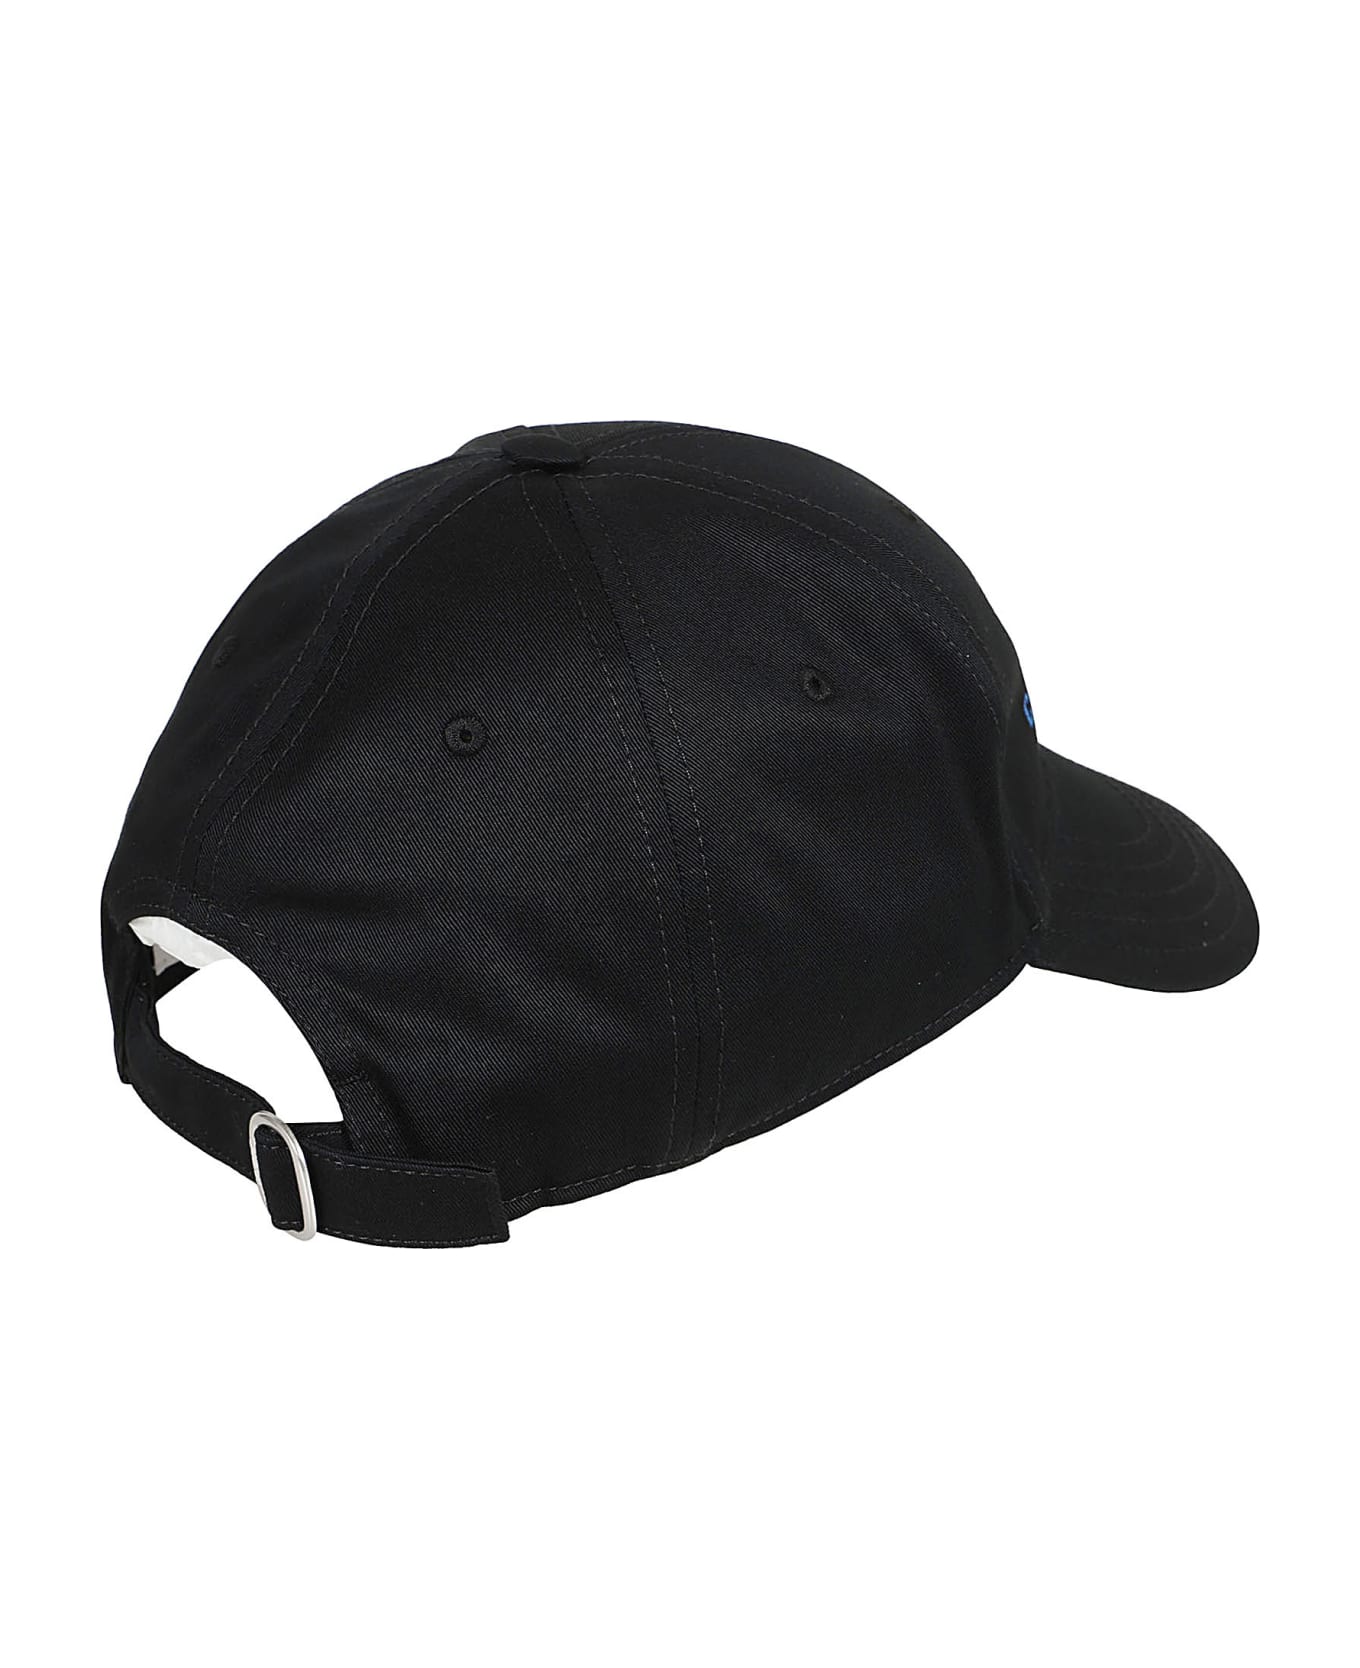 Off-White Washed Est 13 Baseball Cap - Black Navy Bl 帽子